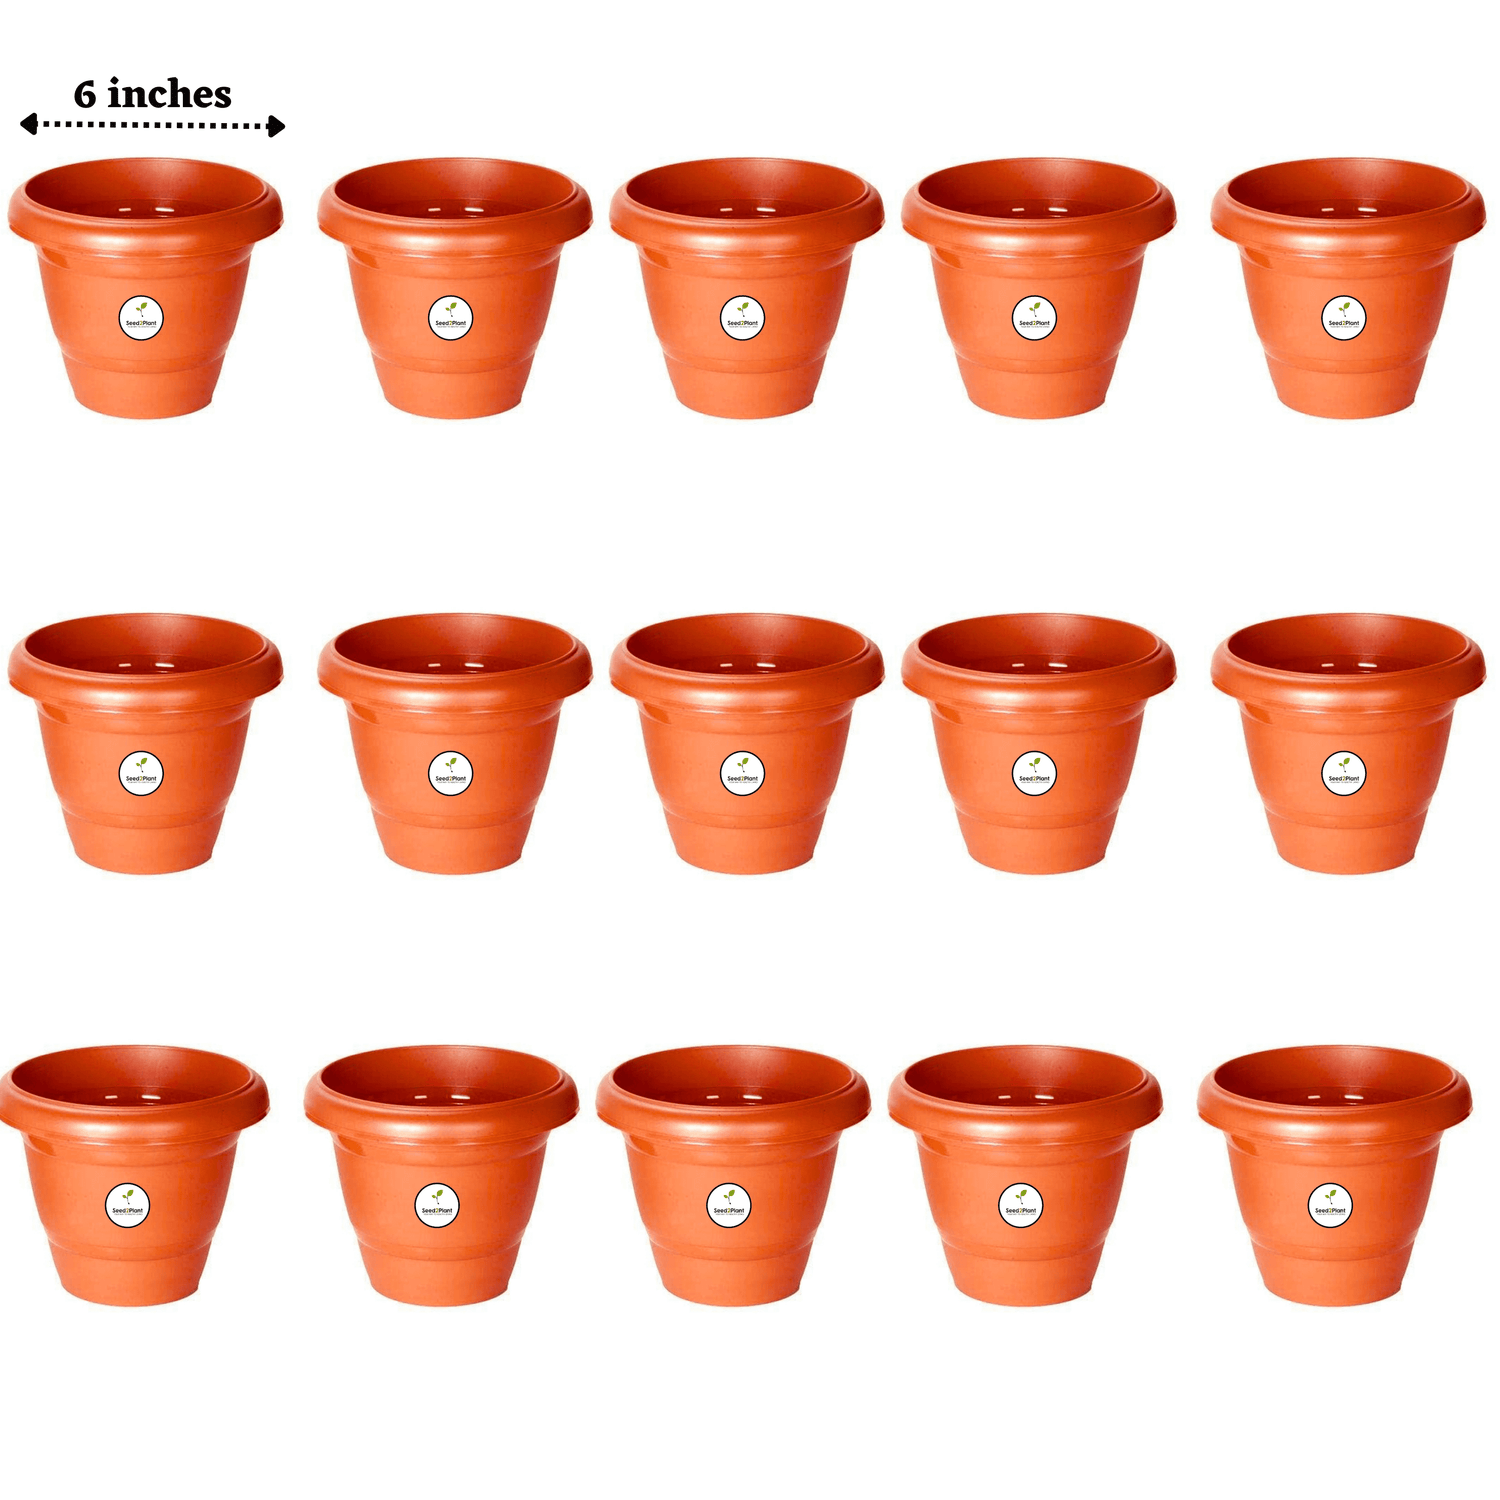 6 Inch UV Treated Plastic Pots - Terracotta Colour